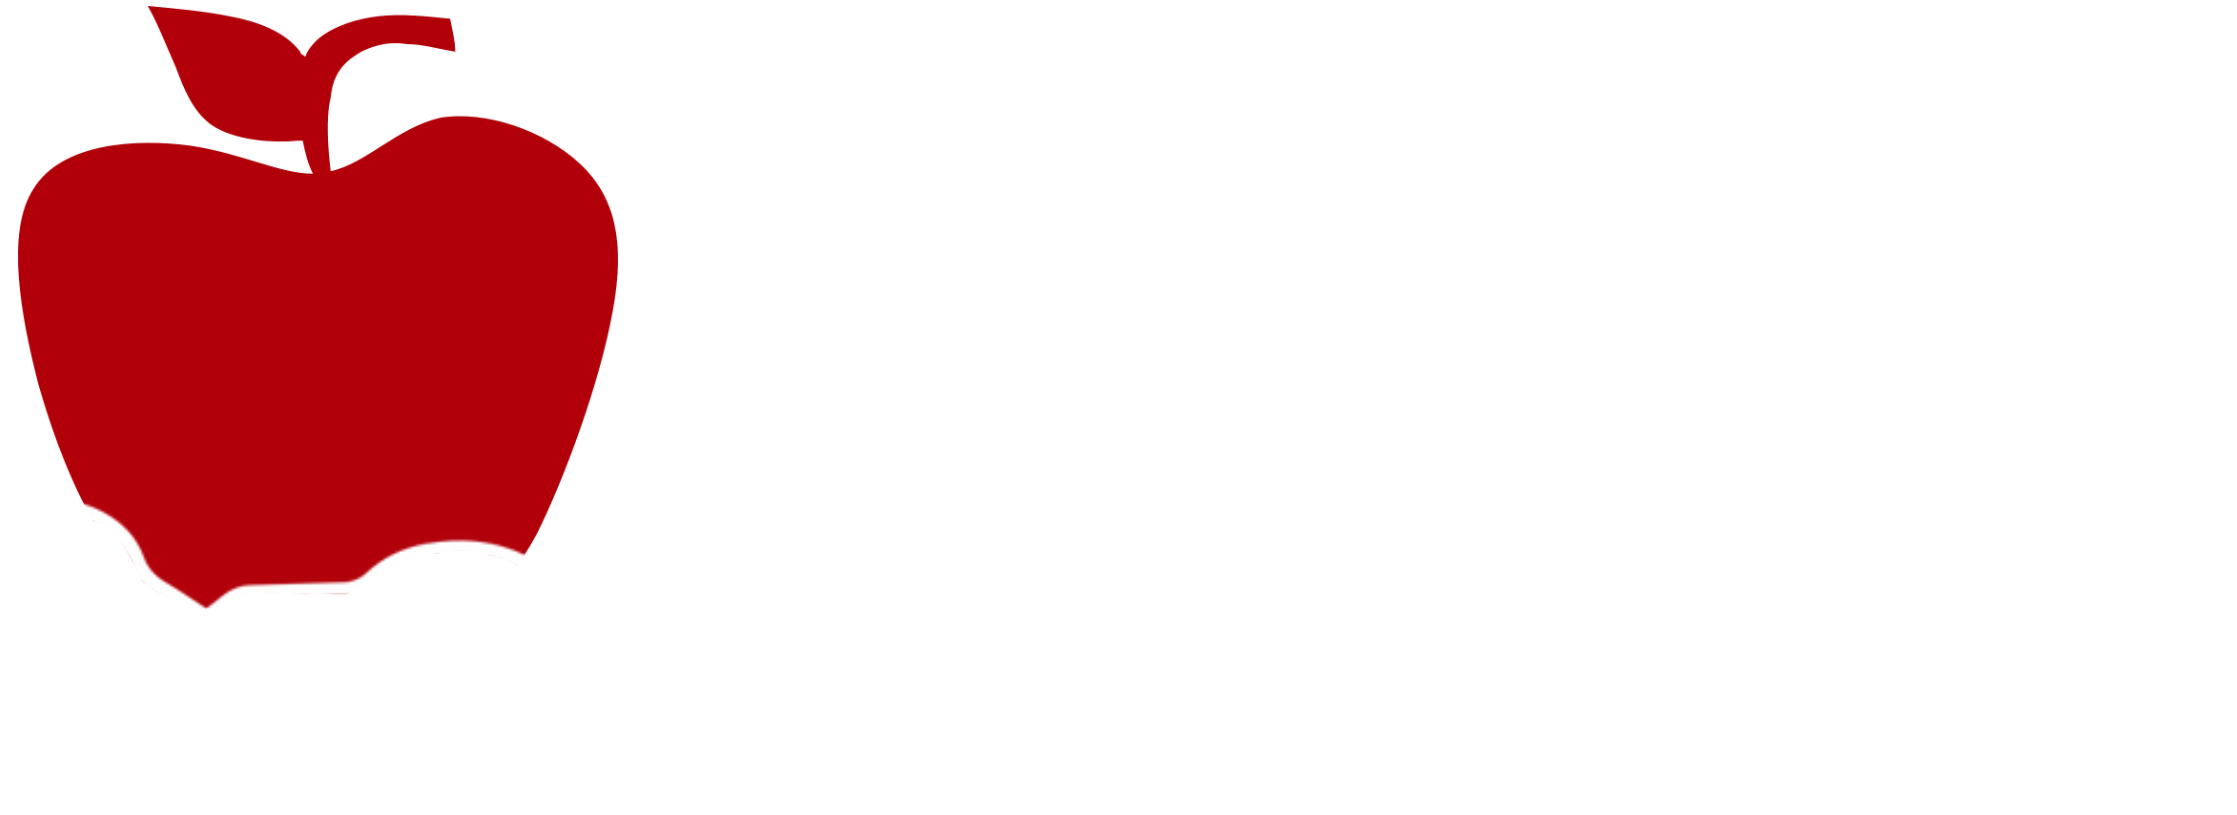 Safe Schools Non-Profit